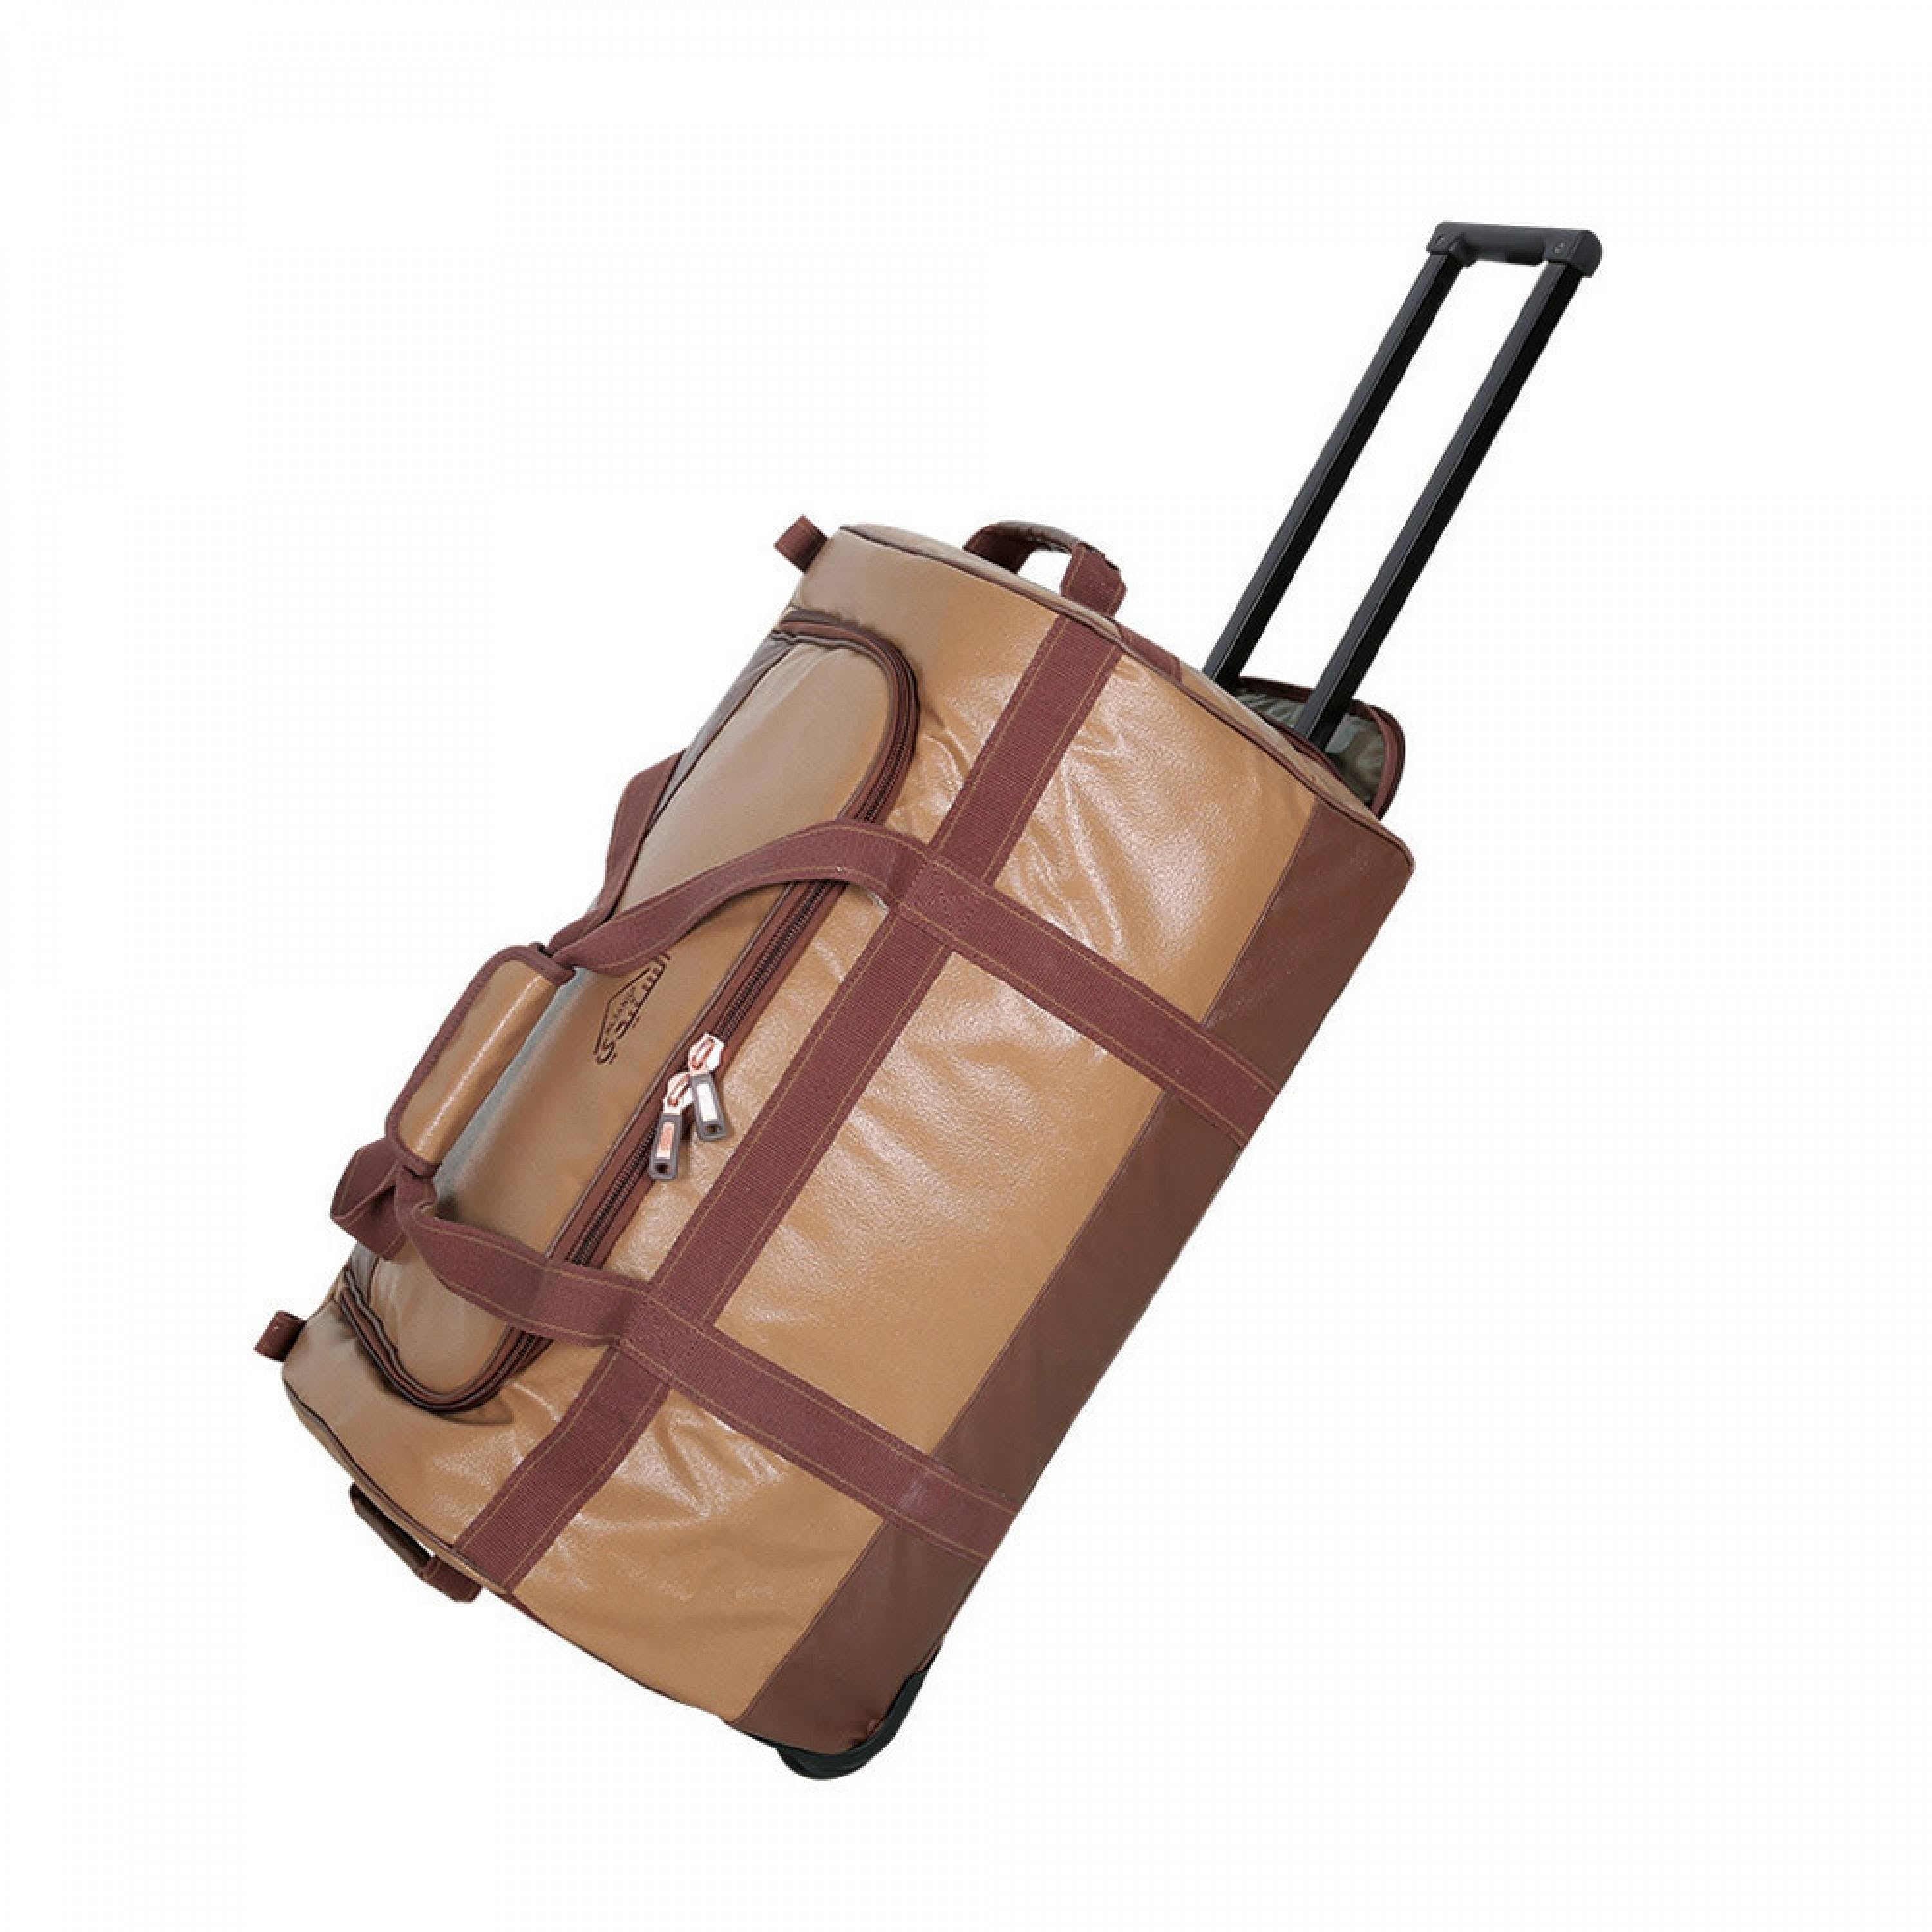 Al-Sanidi Travel Bag - Your Perfect Travel Companion | 60 * 35.5 * 32 cm